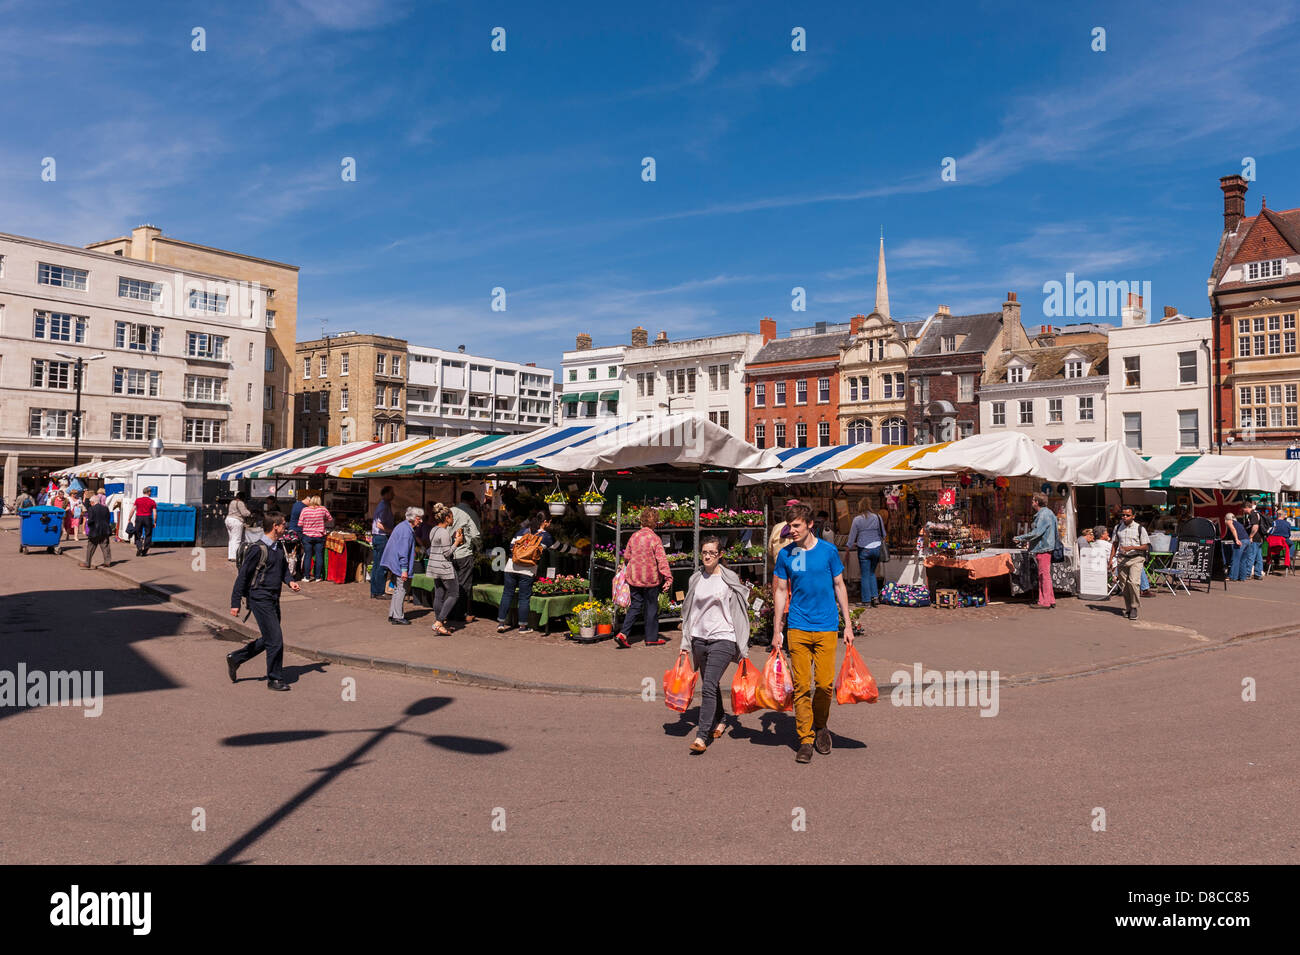 The market in Cambridge, England, Britain, Uk Stock Photo